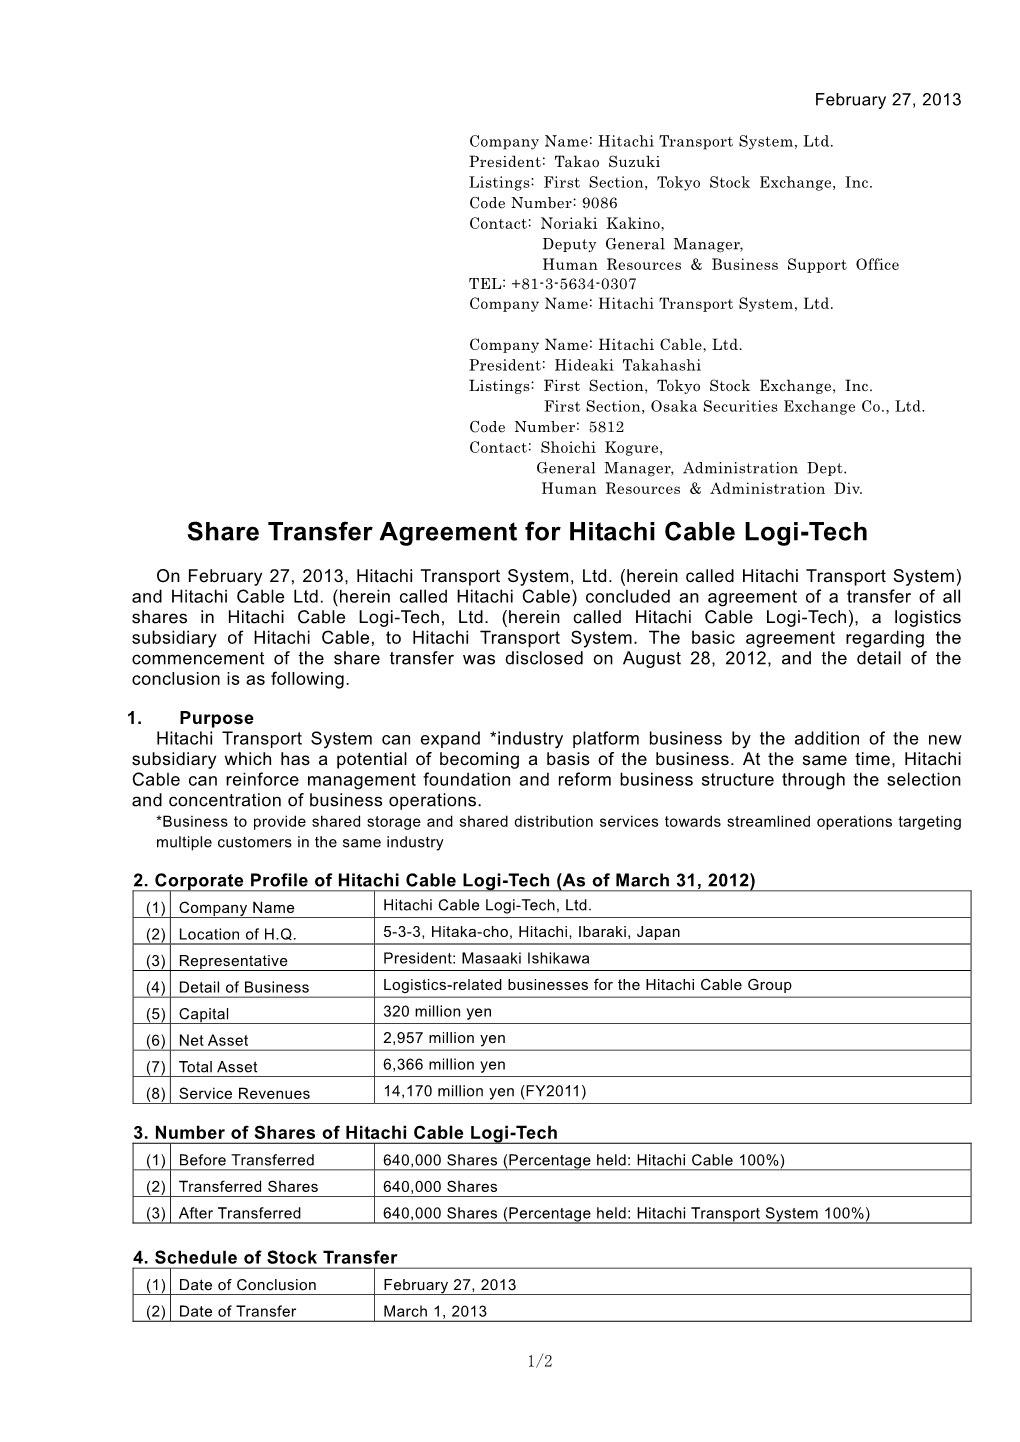 Share Transfer Agreement for Hitachi Cable Logi-Tech